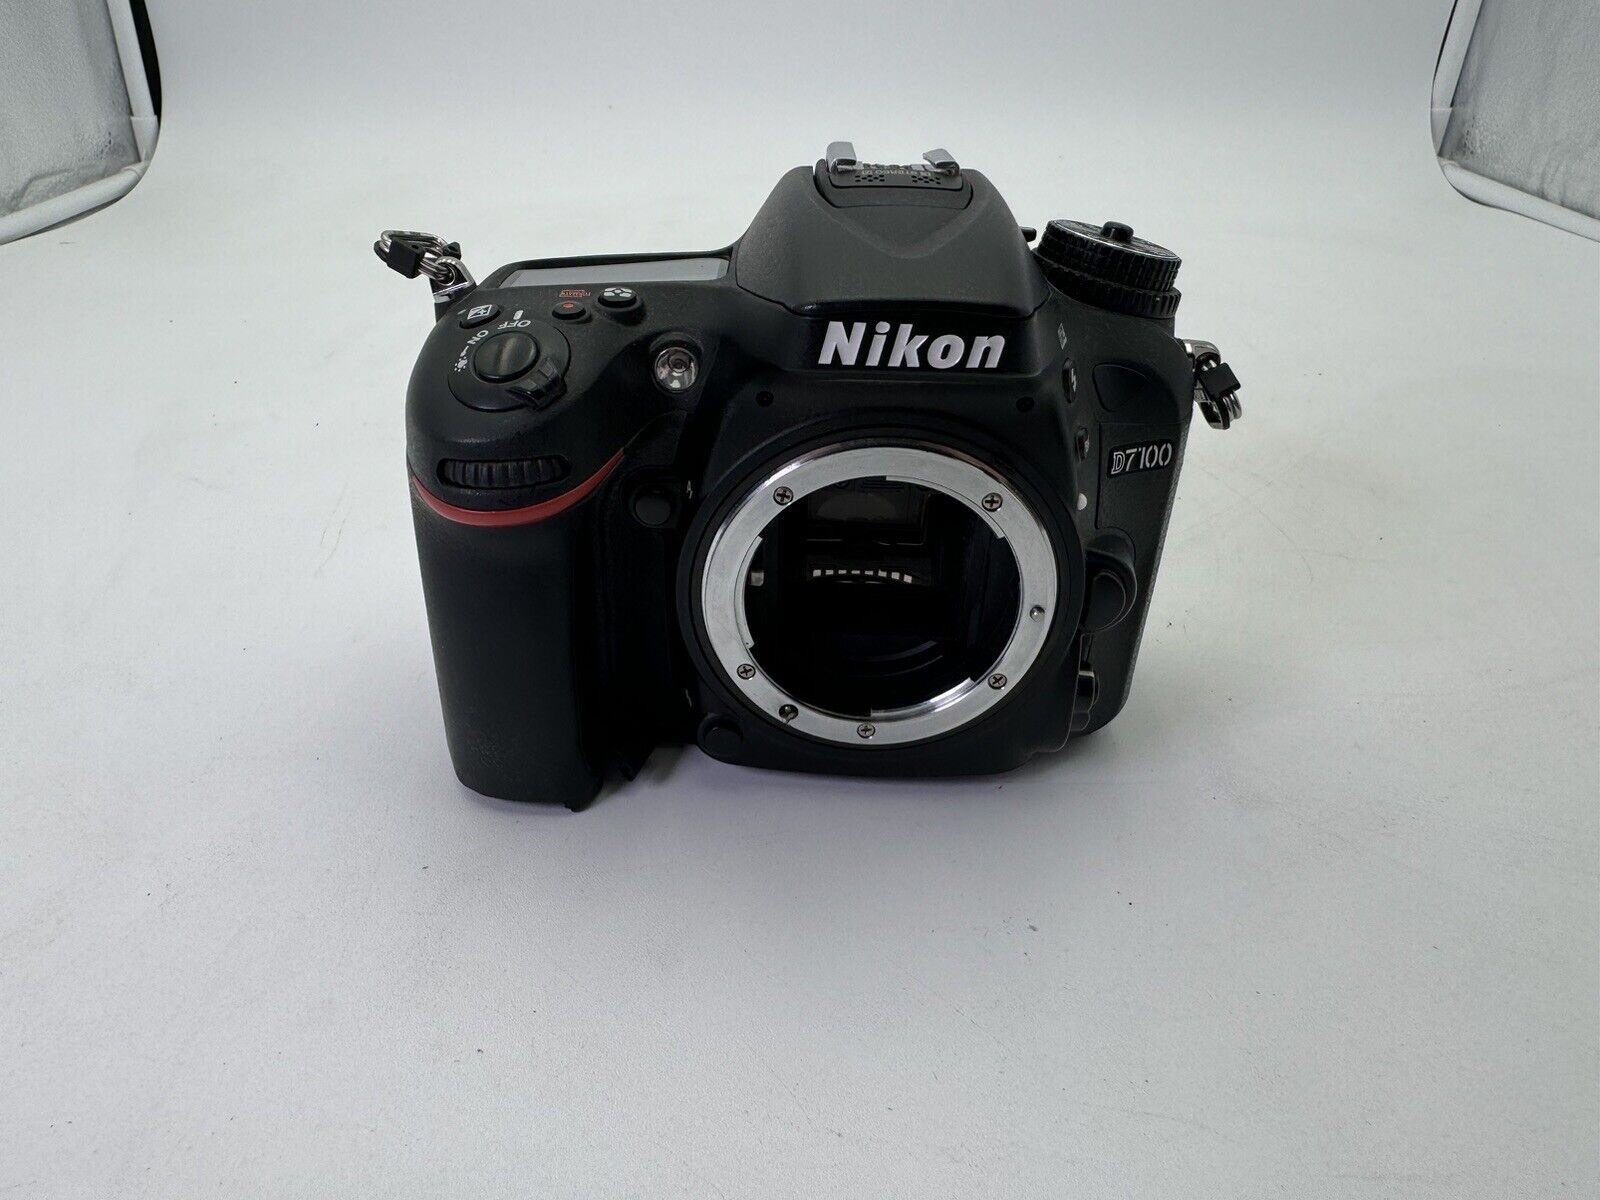 Nikon D7100 Digital SLR Camera Body 24mp - Black - READ